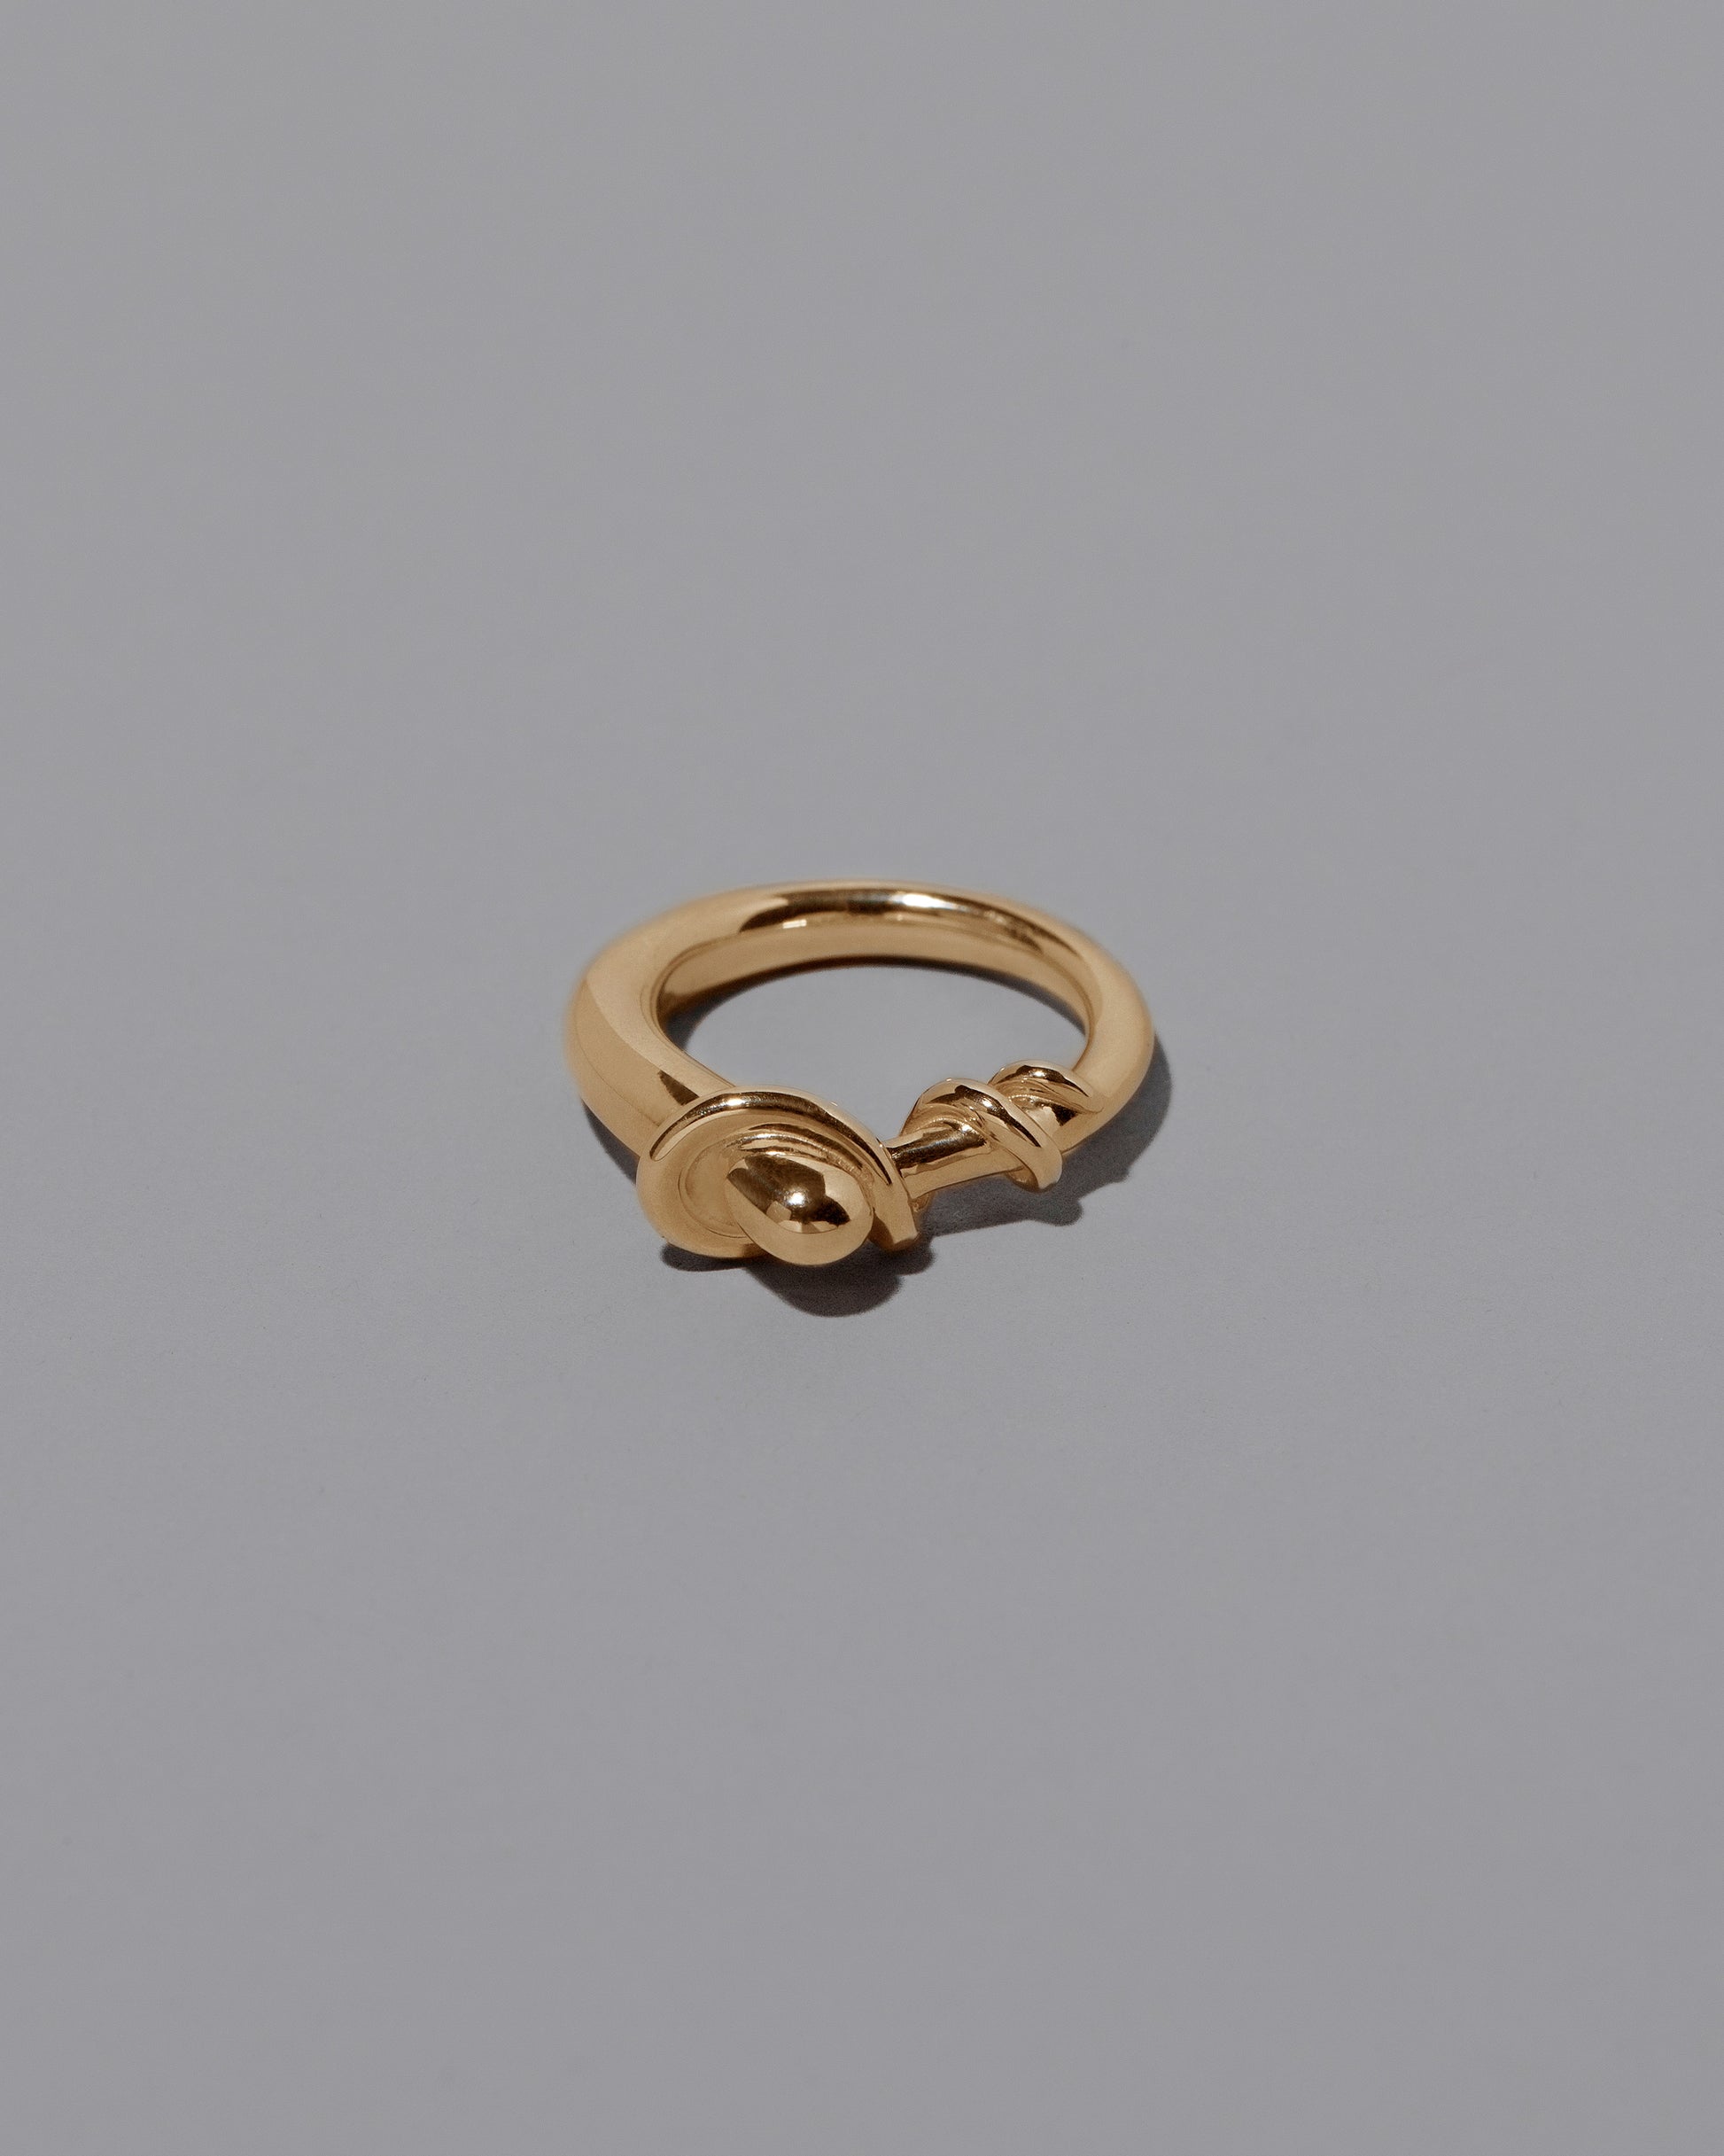 CRZM 22k Gold Terrane Ring on light color background.